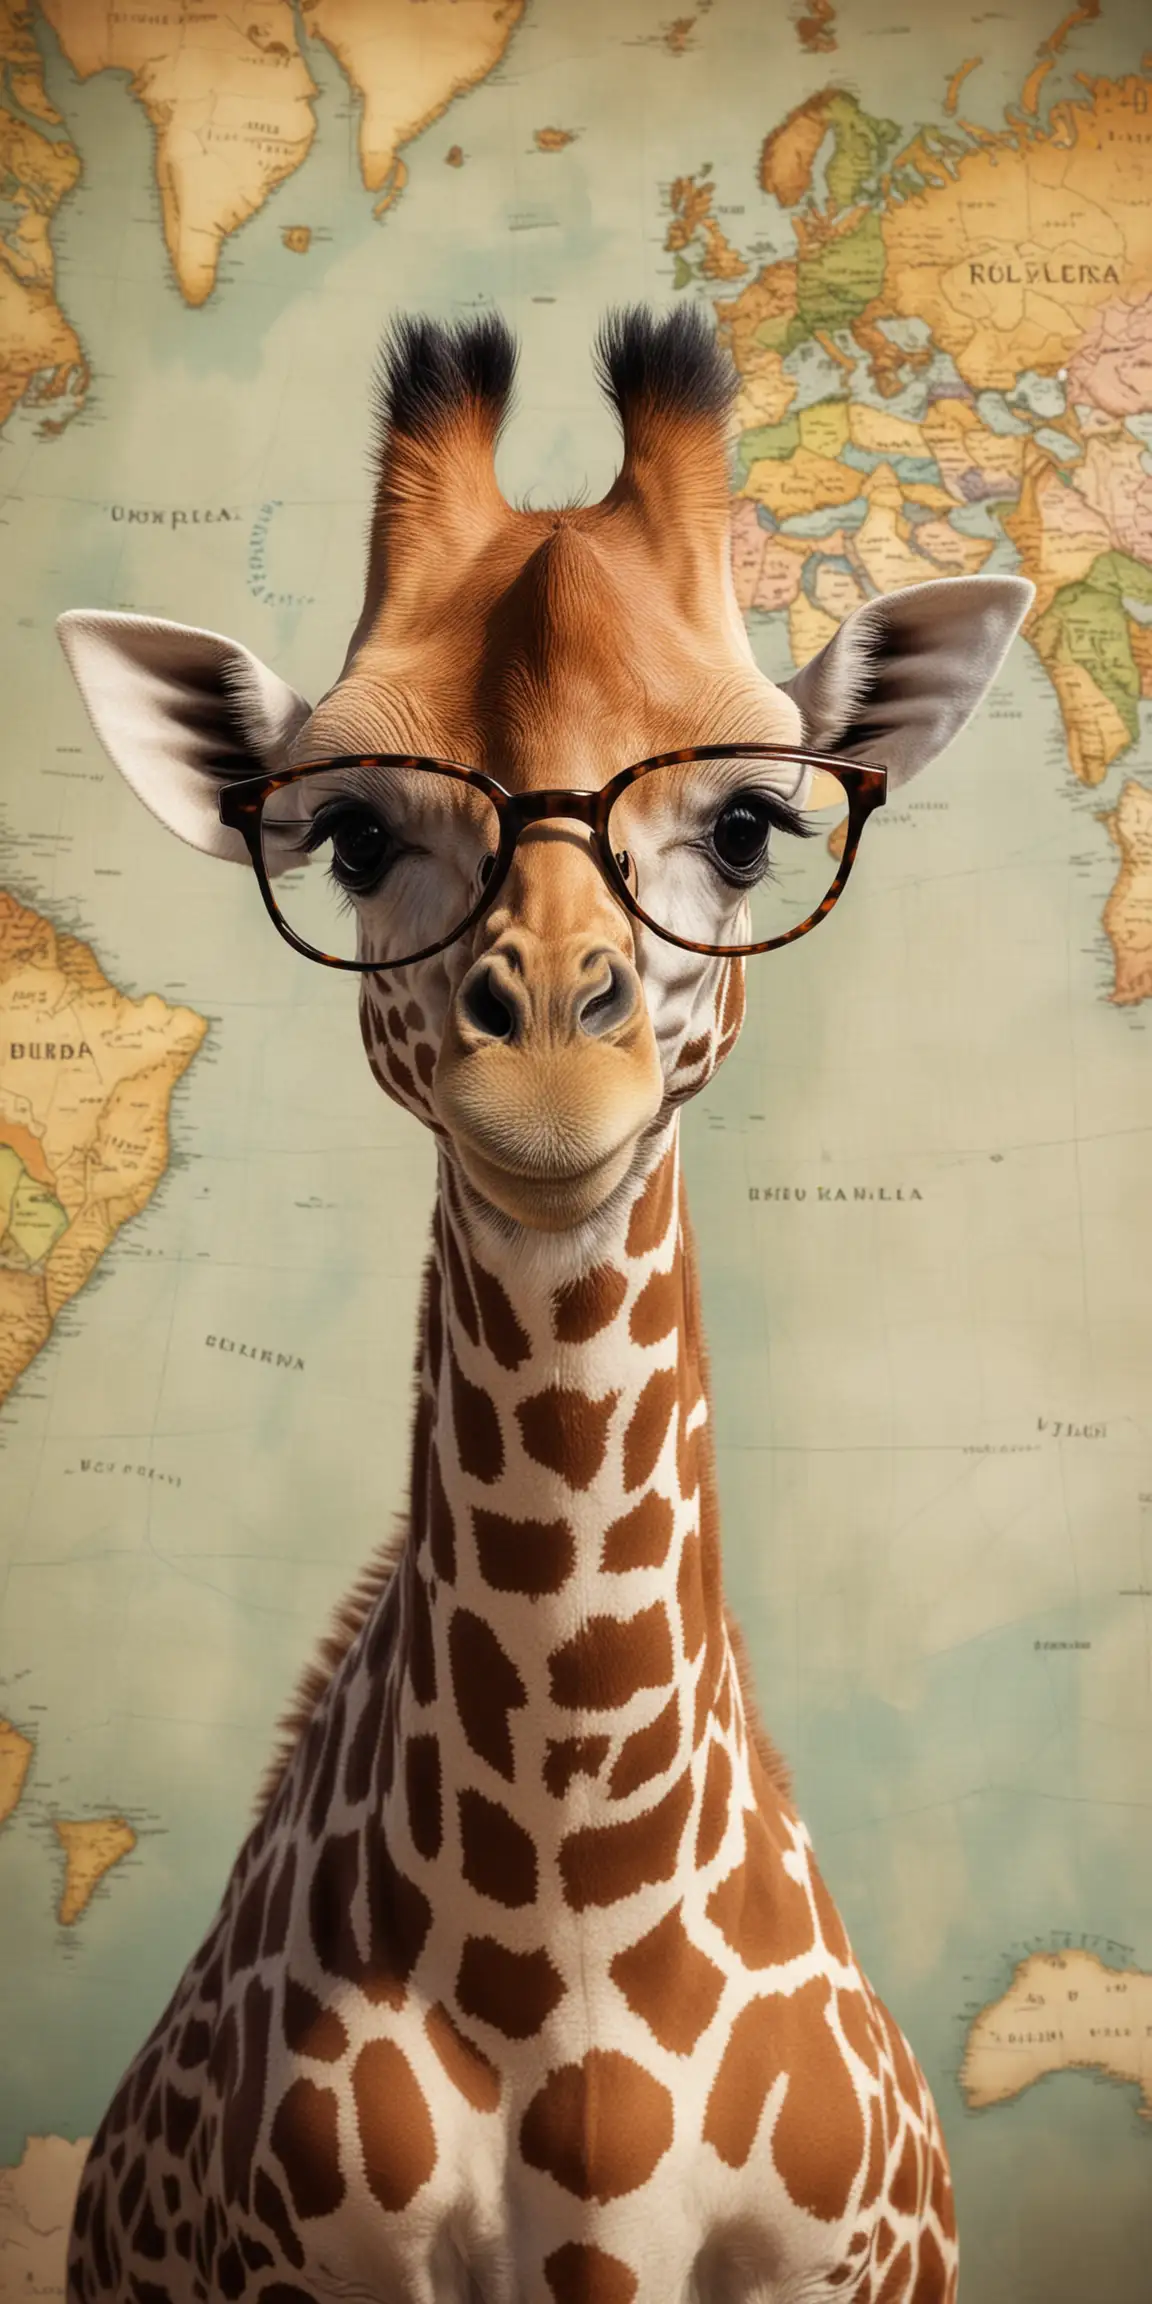 baby giraffe wearing glasses in the map